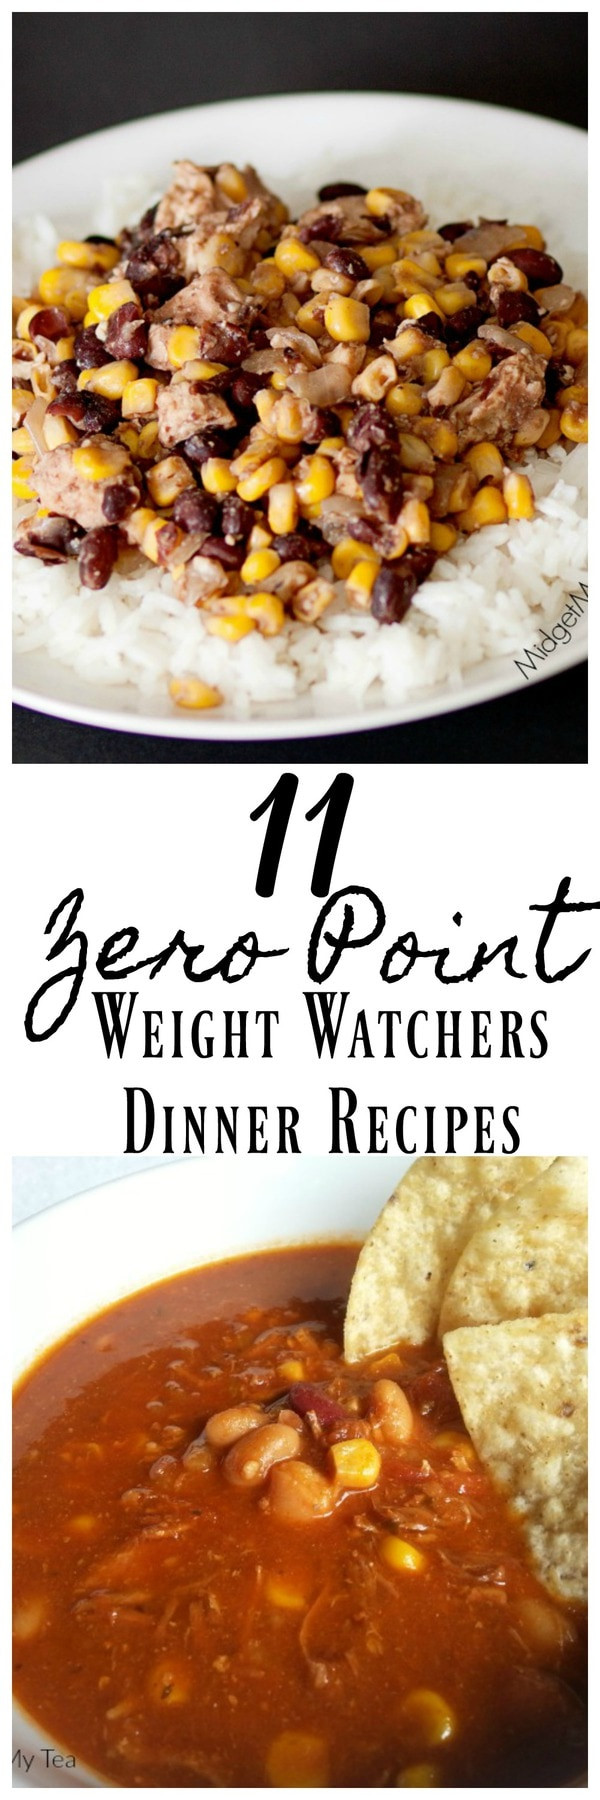 Weight Watchers Recipe Dinner
 11 Zero Point Weight Watchers Dinner Recipes • Mid Momma